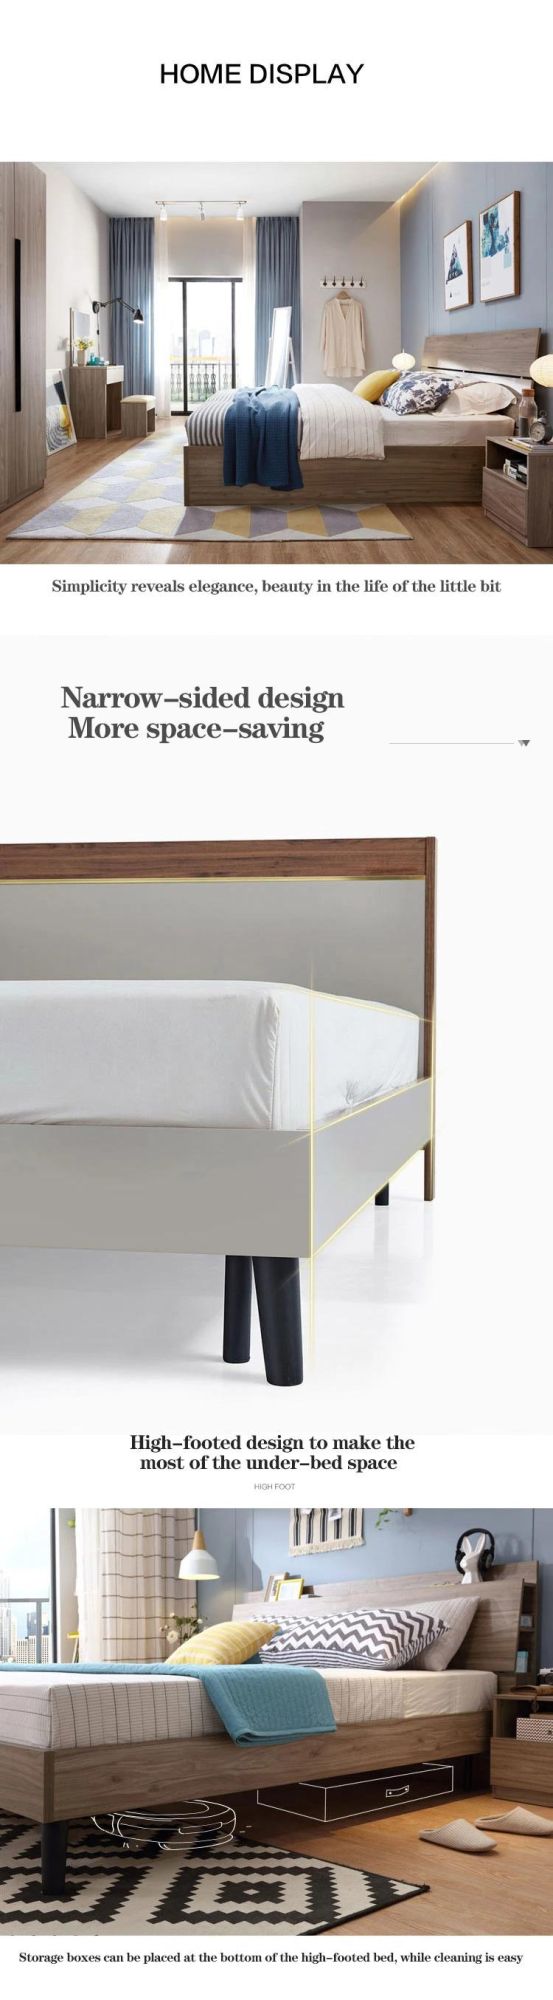 Furniture Bedroom Sets Luxury 5 Star King Size Wood Style Room Modern Hotel Color